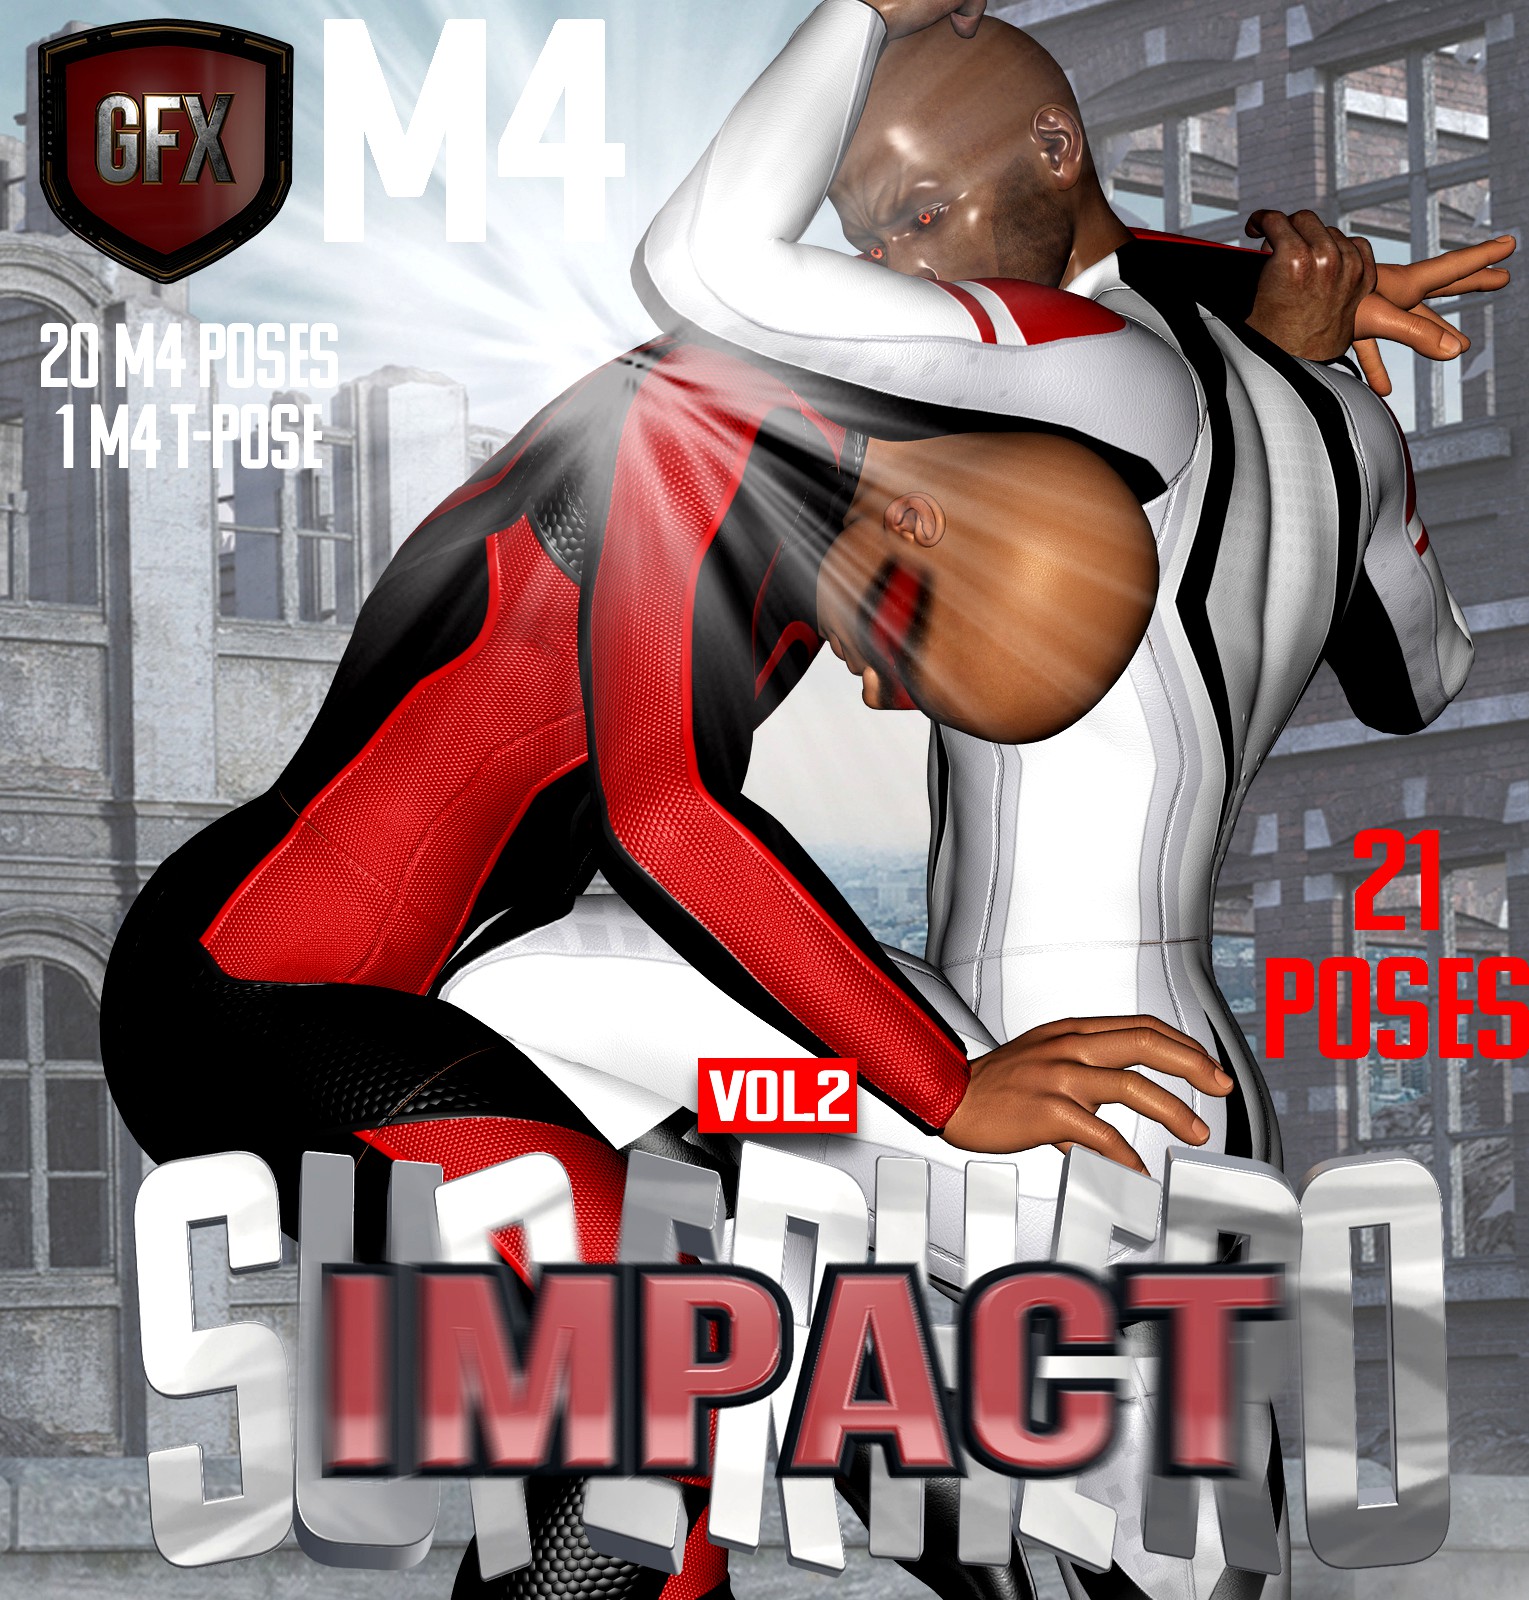 SuperHero Impact for M4 Volume 2